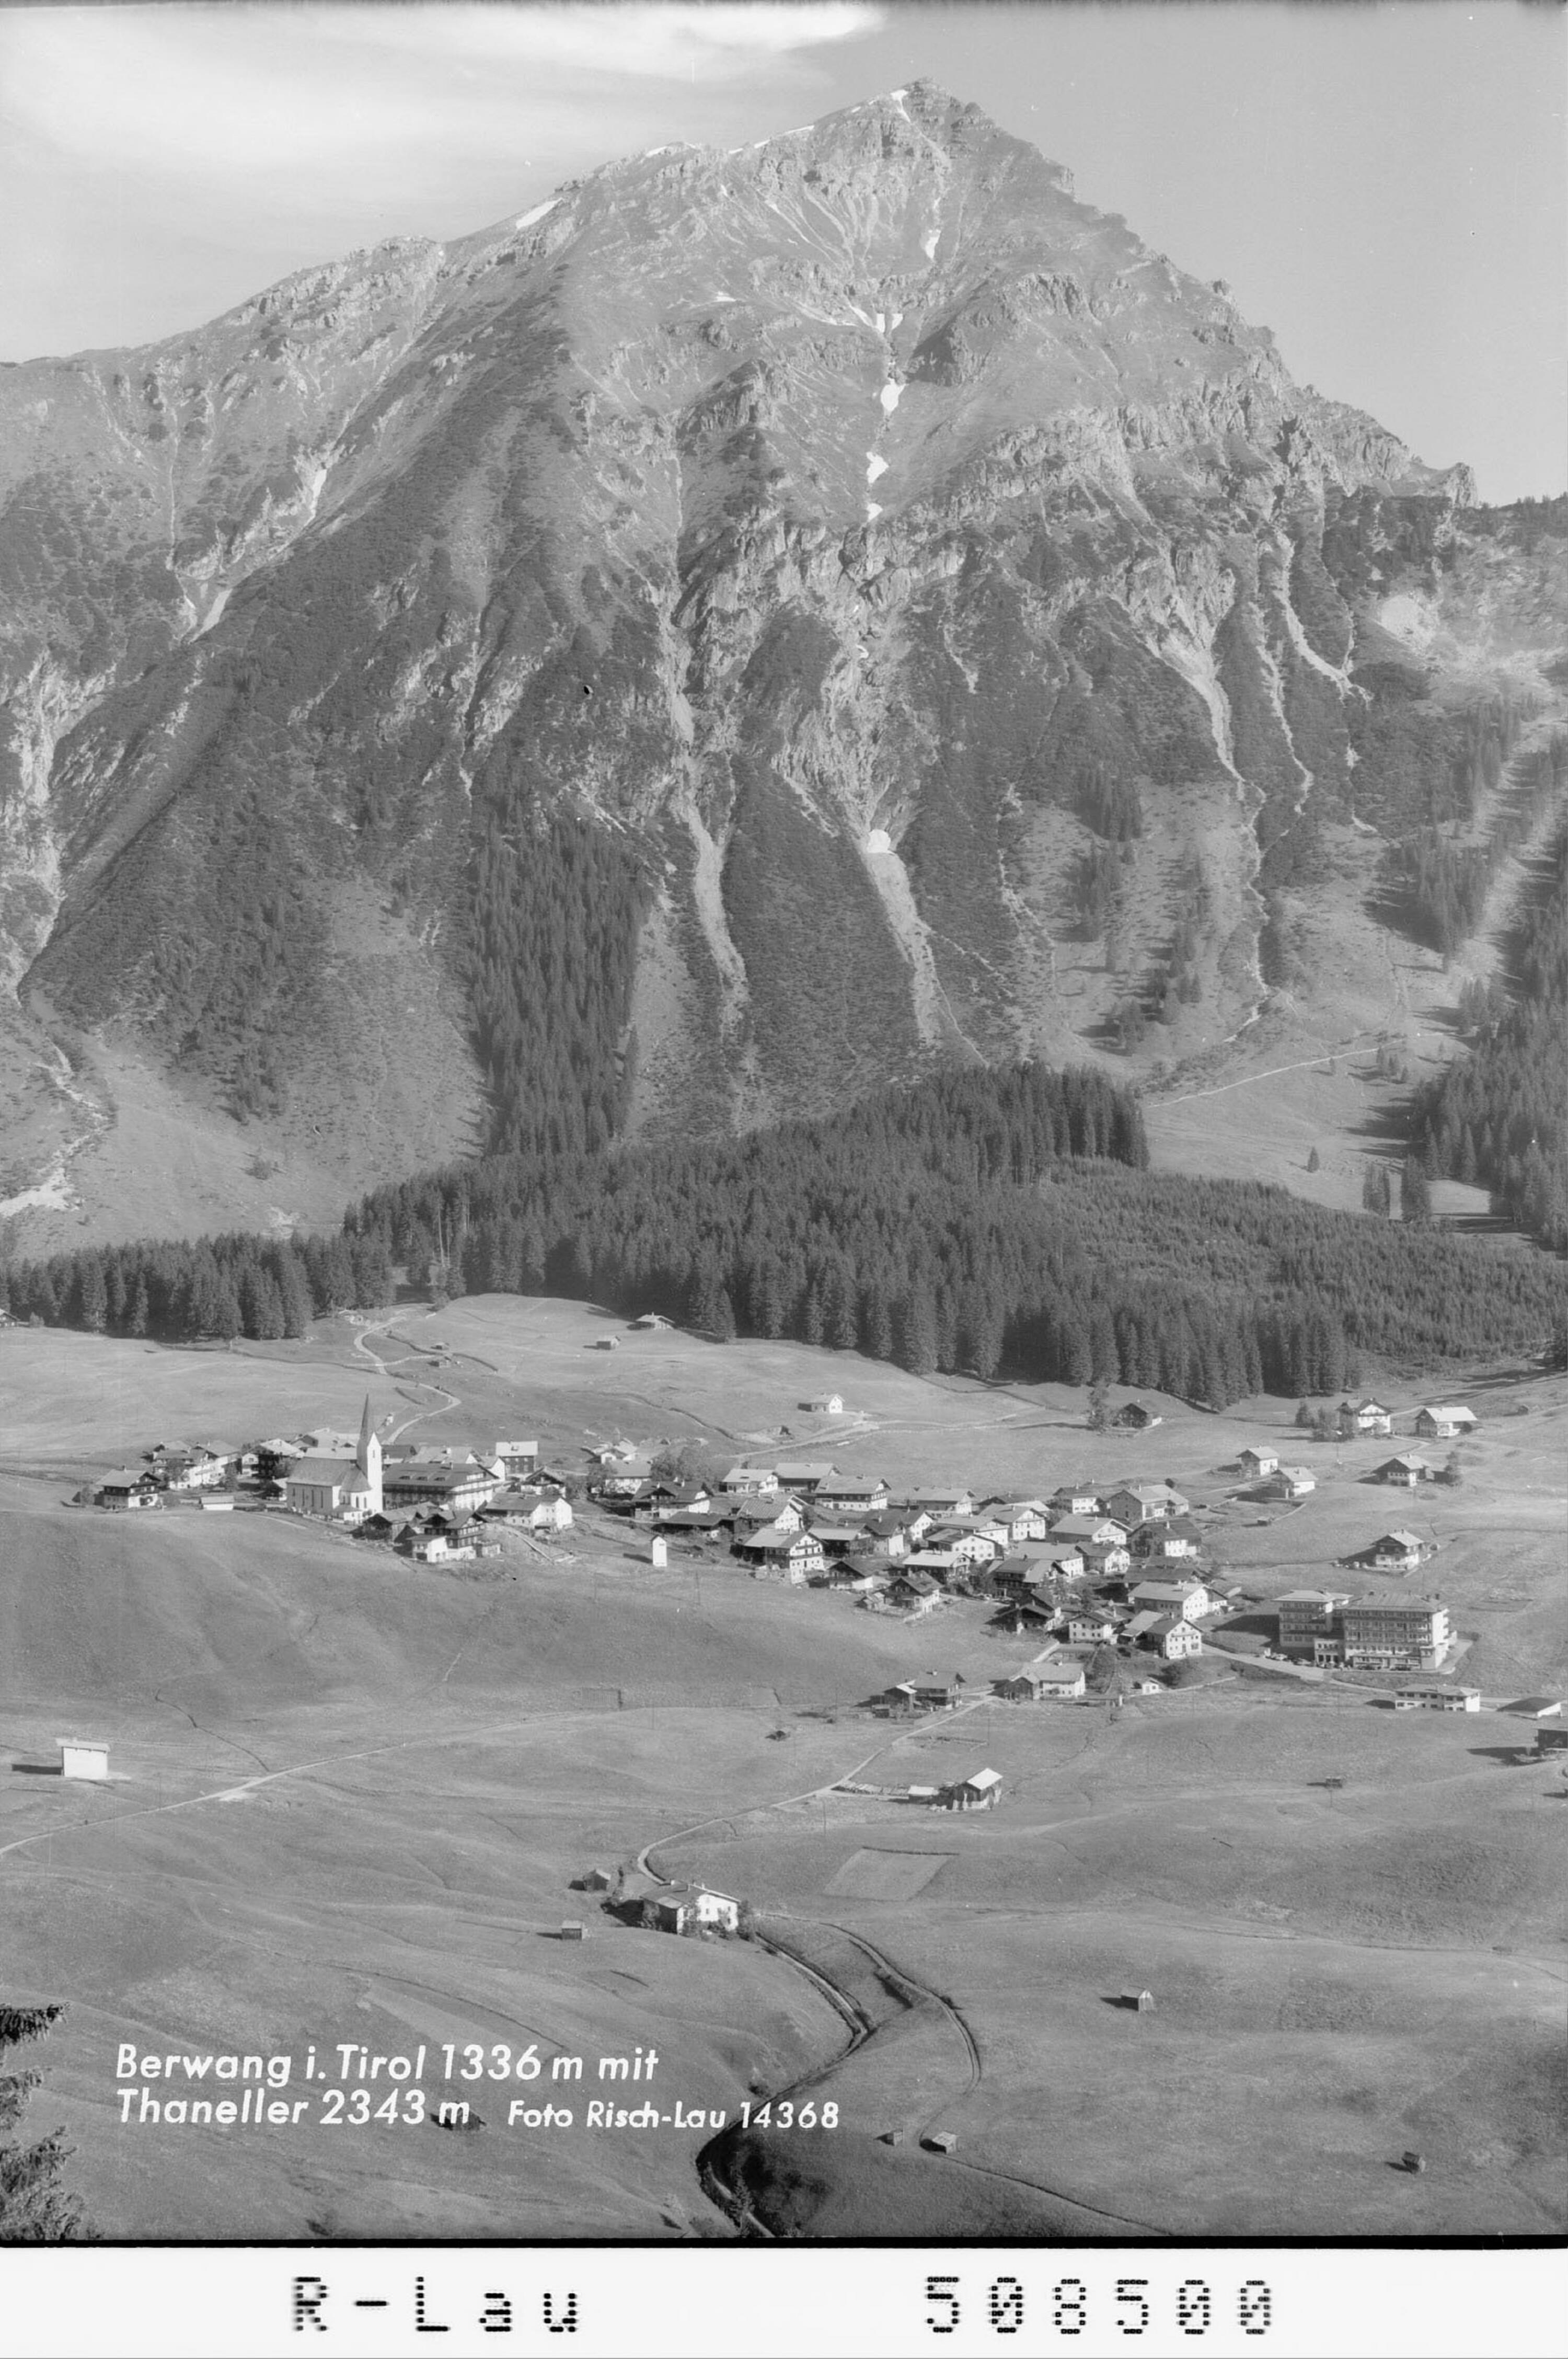 Berwang in Tirol 1336 m mit Thaneller 2343 m></div>


    <hr>
    <div class=